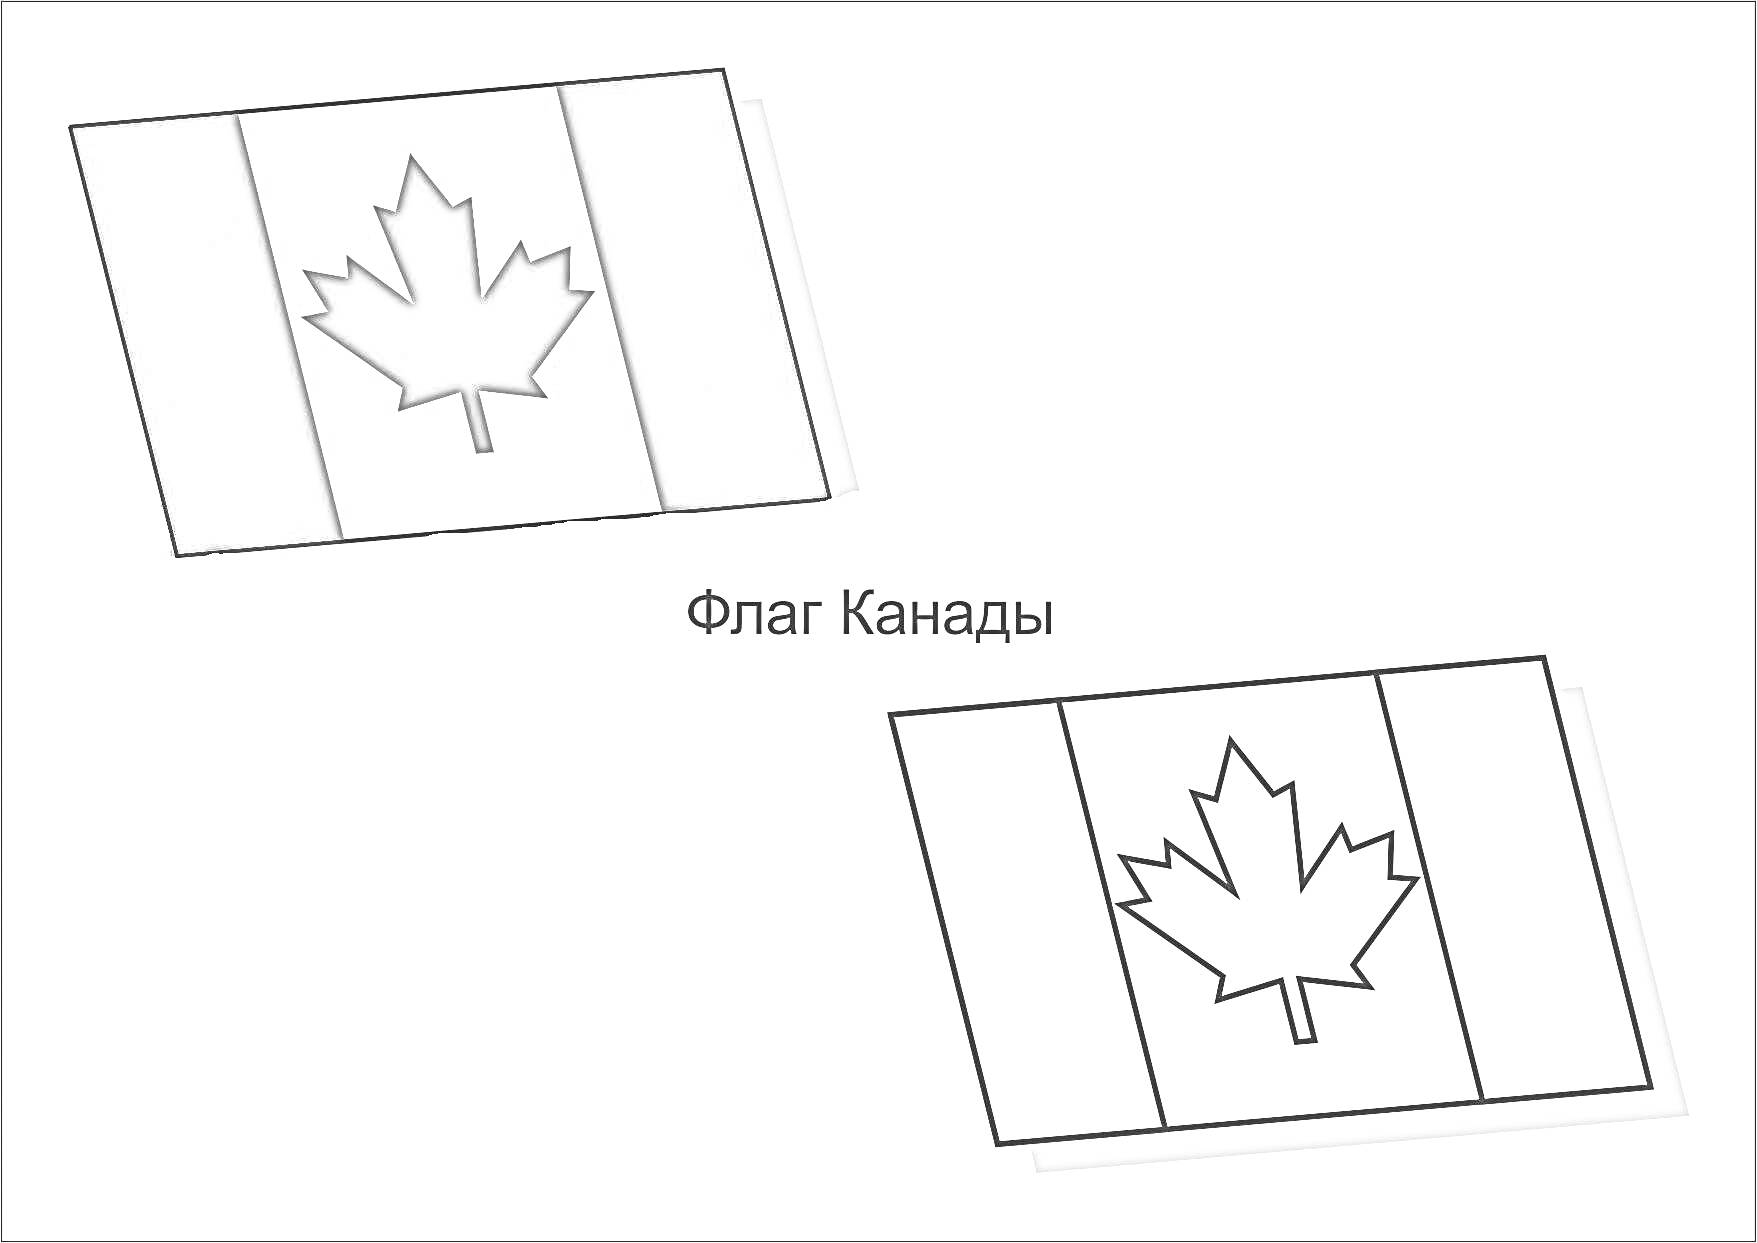 Флаг Канады, два изображения флага Канады - одно в цвете, другое как раскраска, текст 